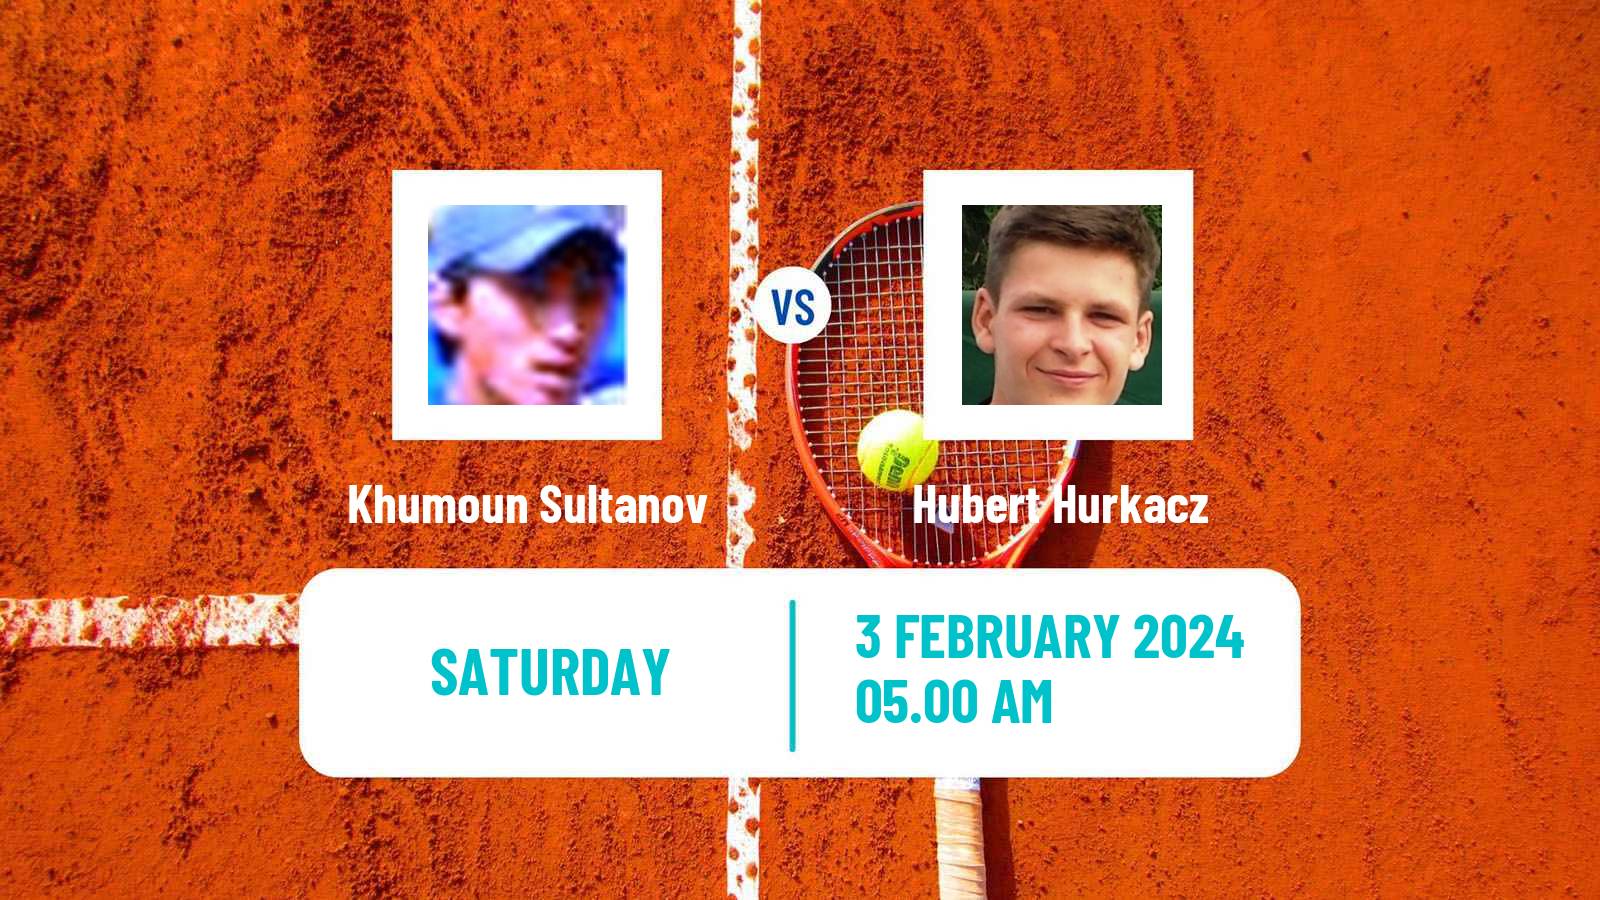 Tennis Davis Cup World Group I Khumoun Sultanov - Hubert Hurkacz